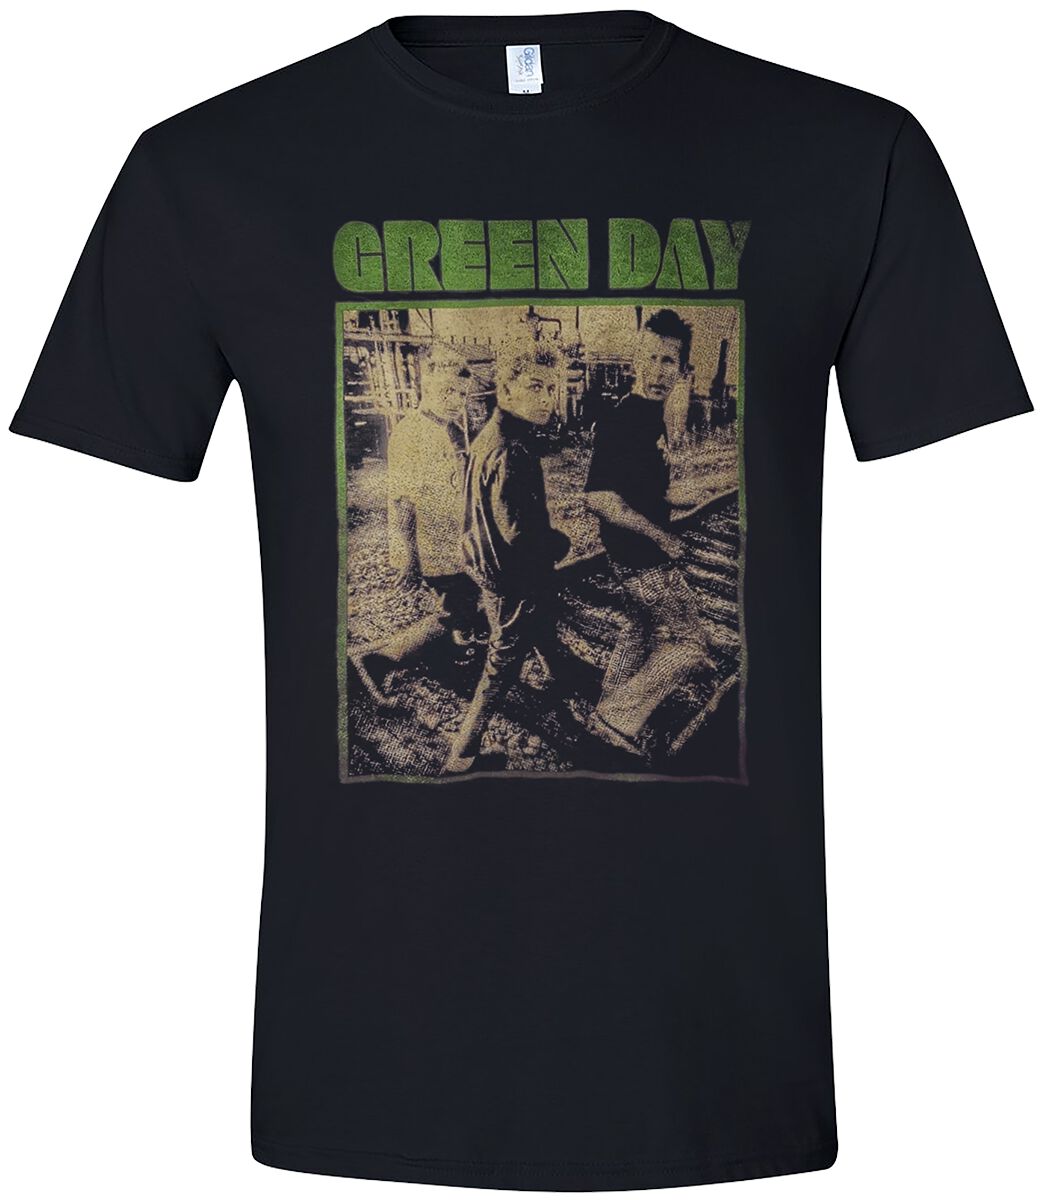 Green Day Train Tracks Revolution T-Shirt schwarz in M